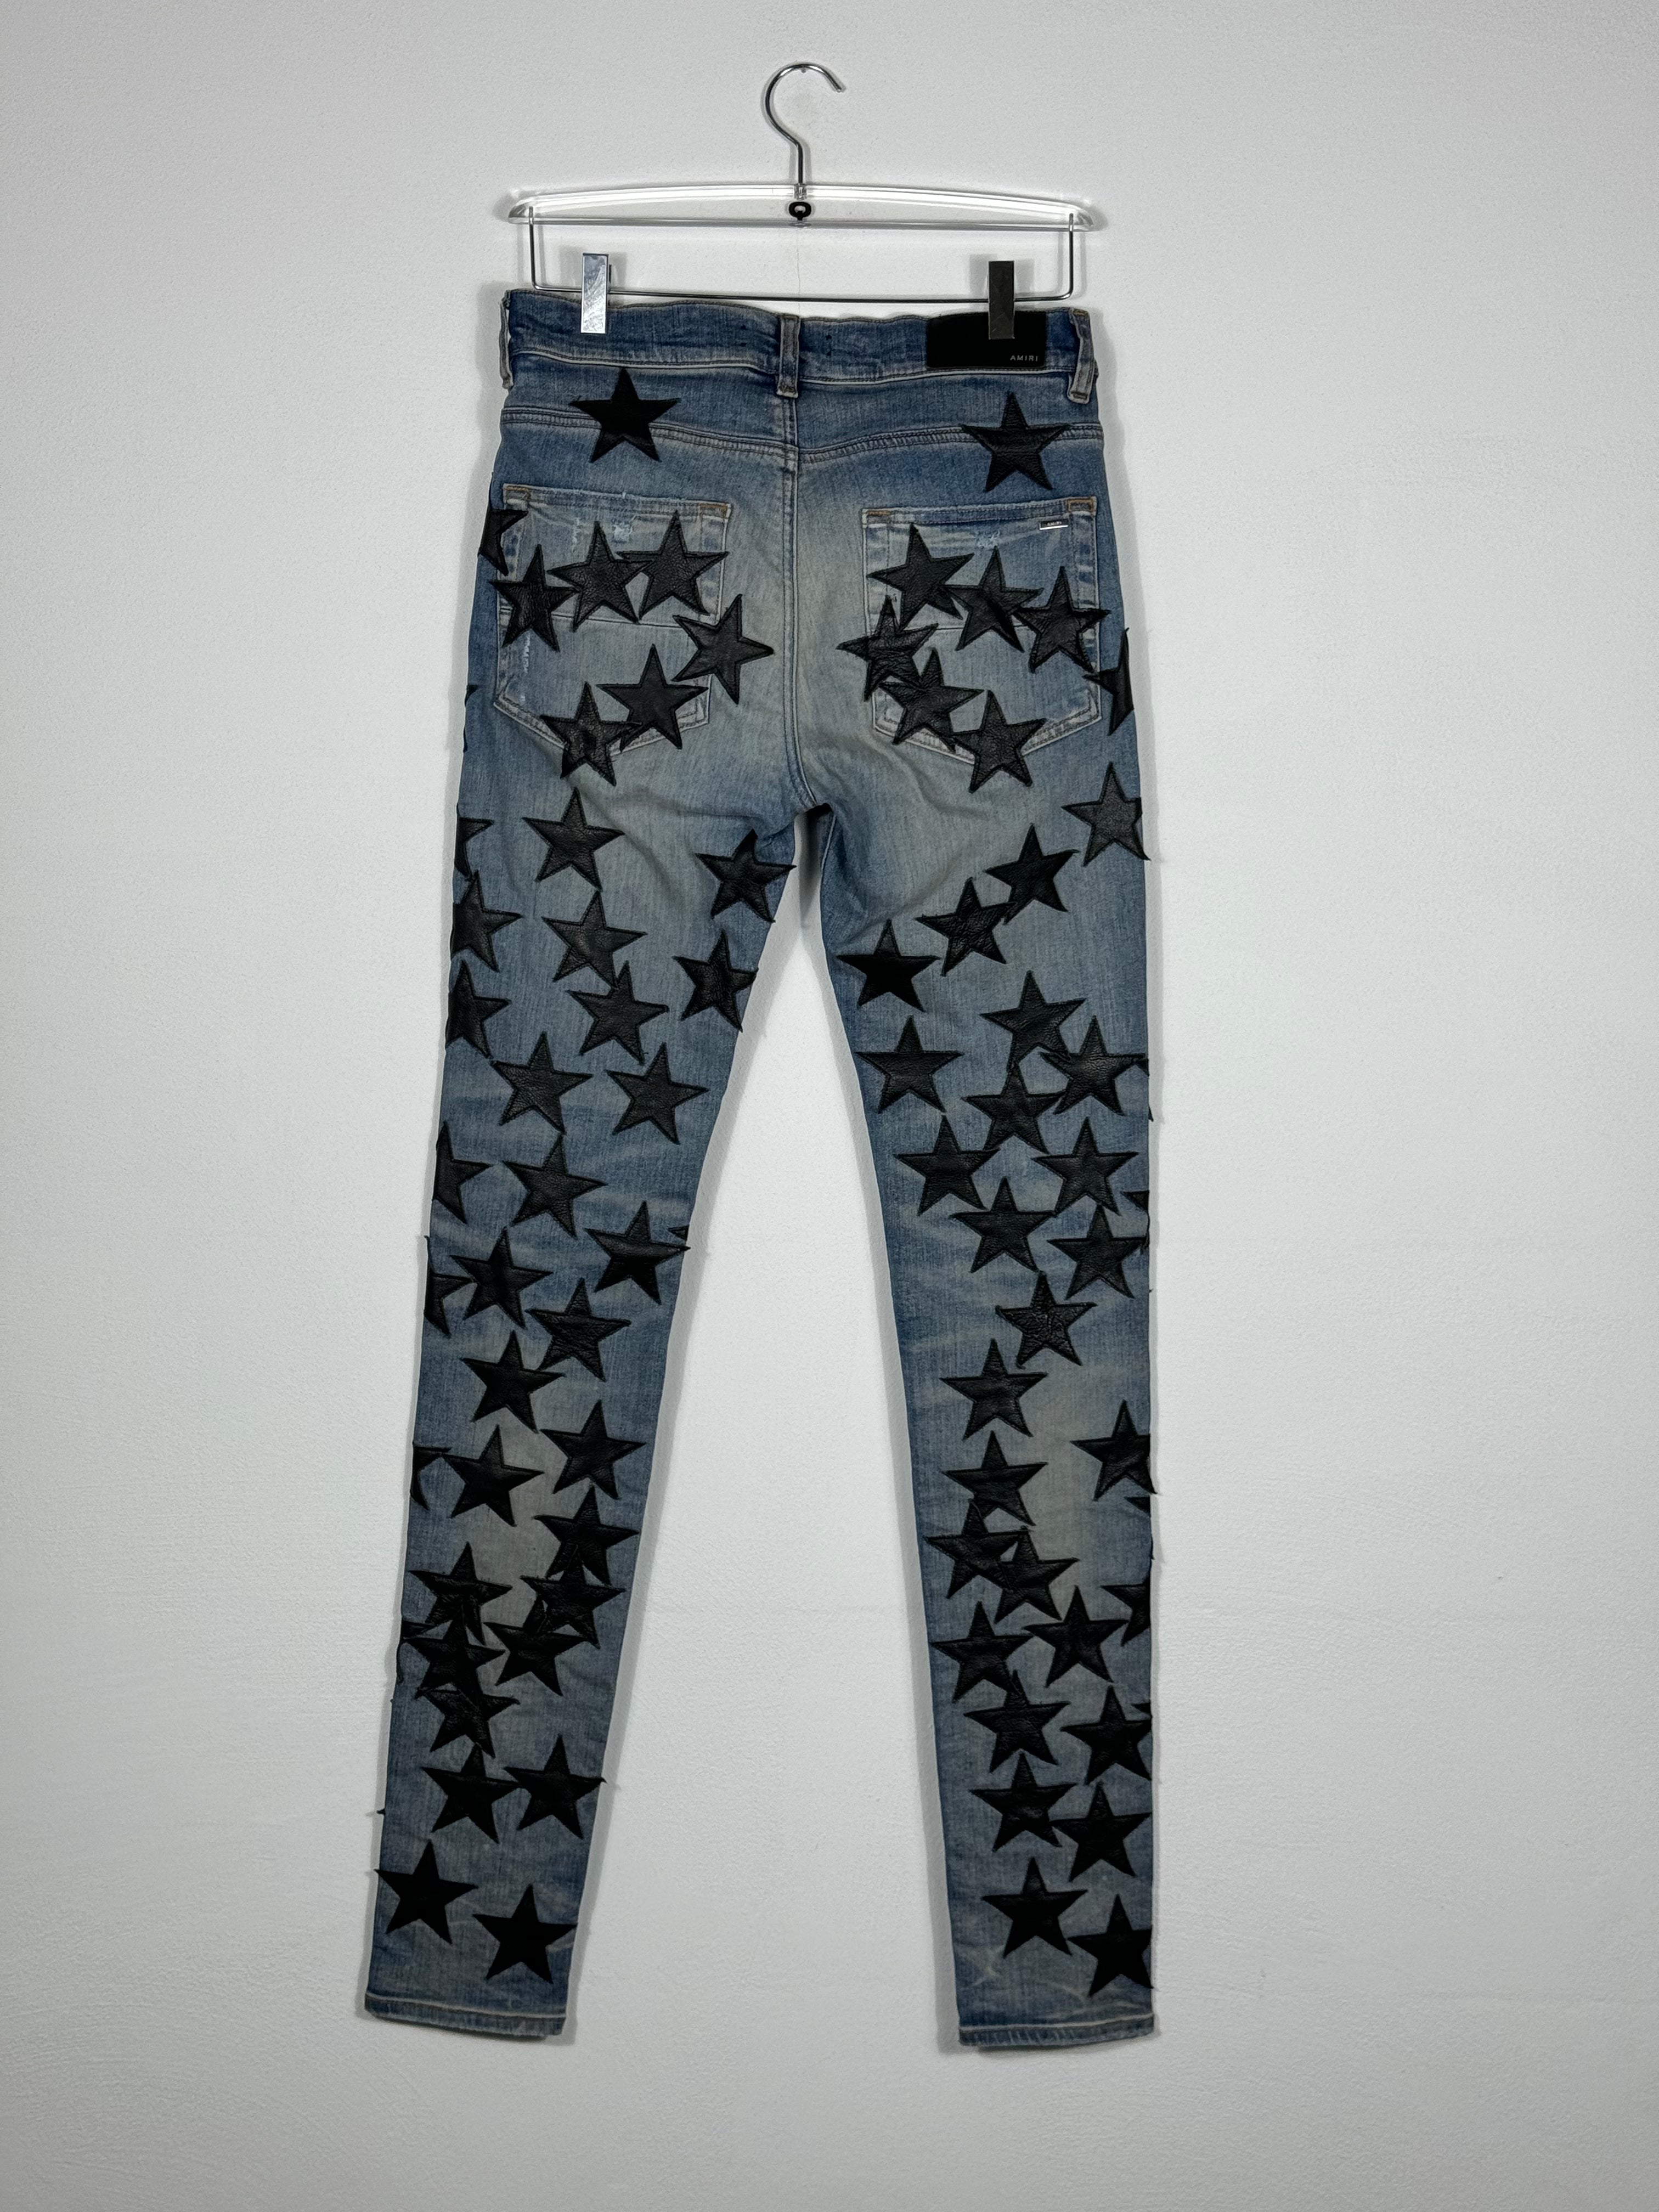 Black Star Jeans